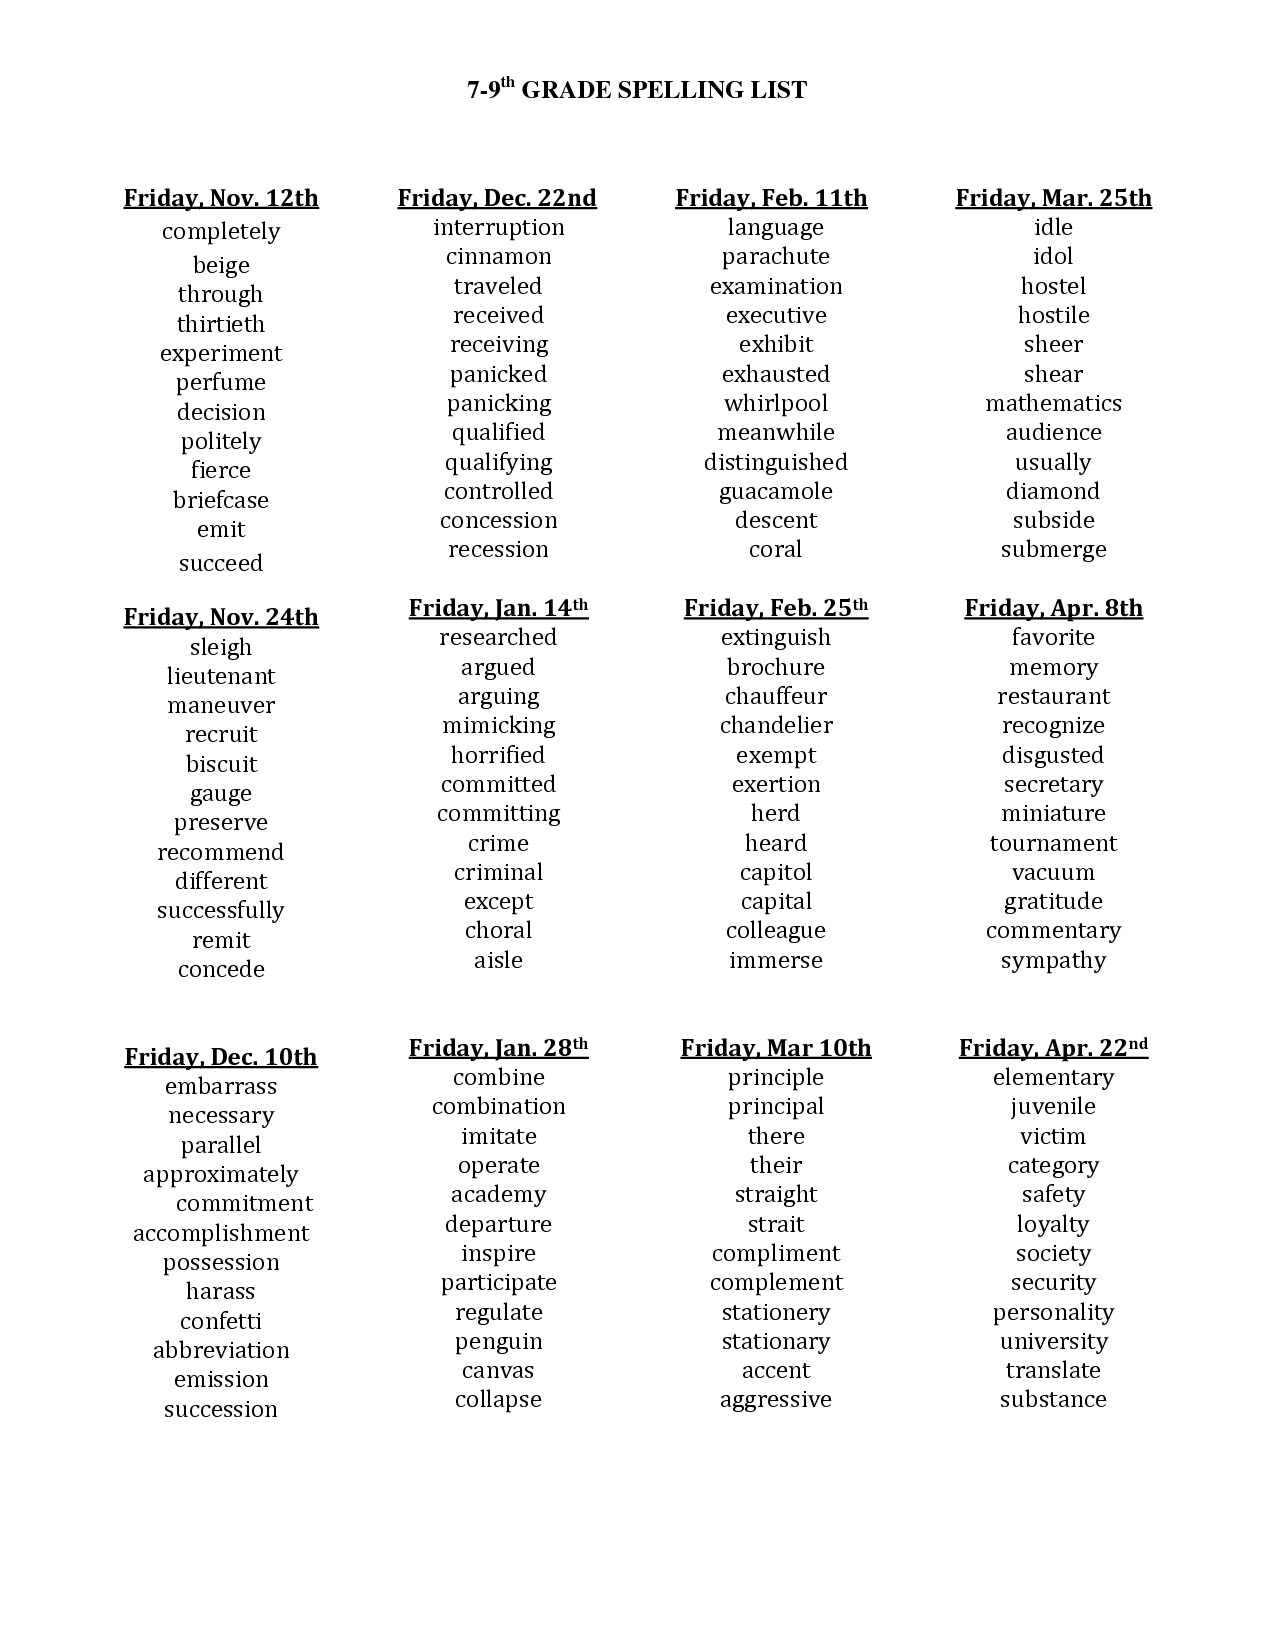 9th Grade Spelling List Image